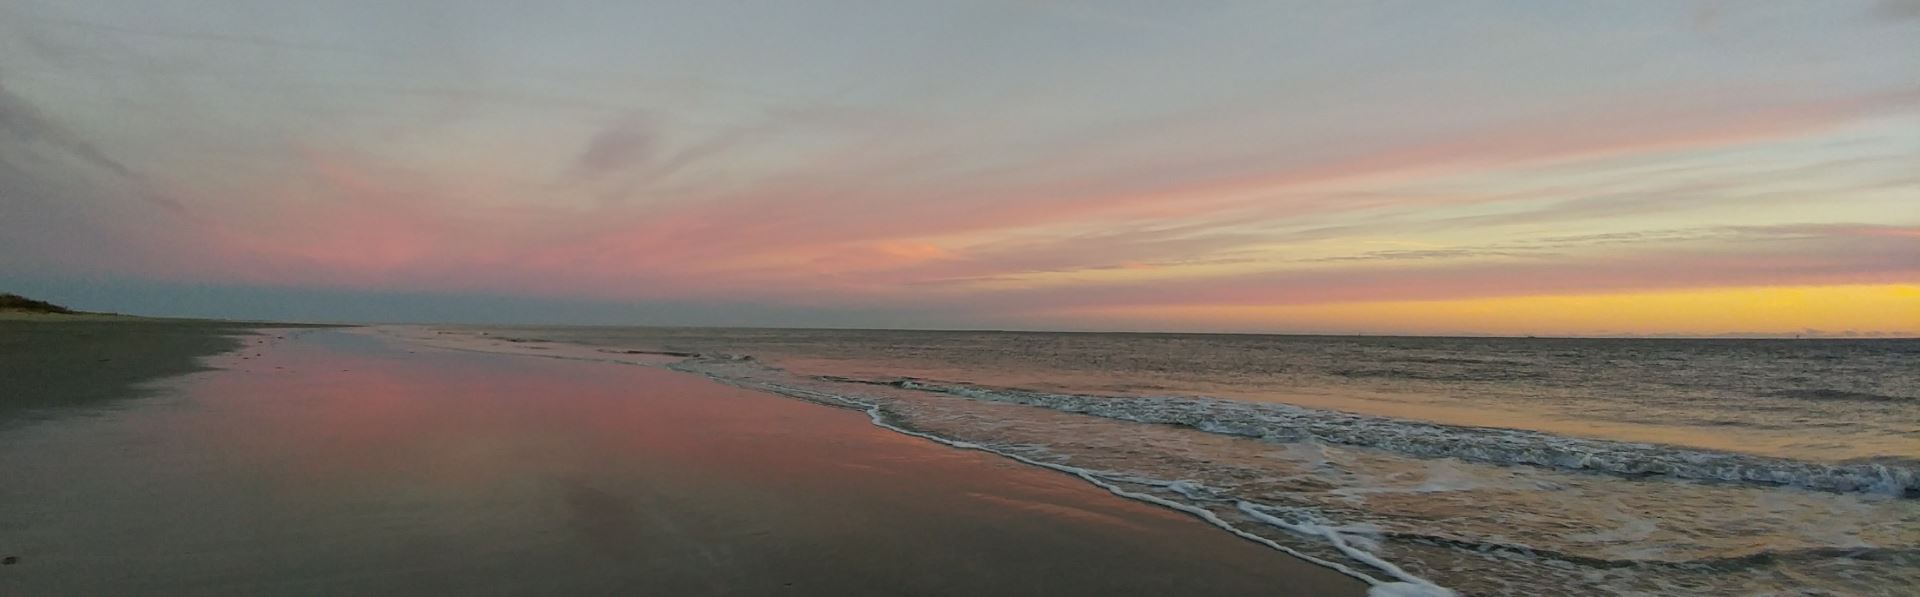 sunset at the beach